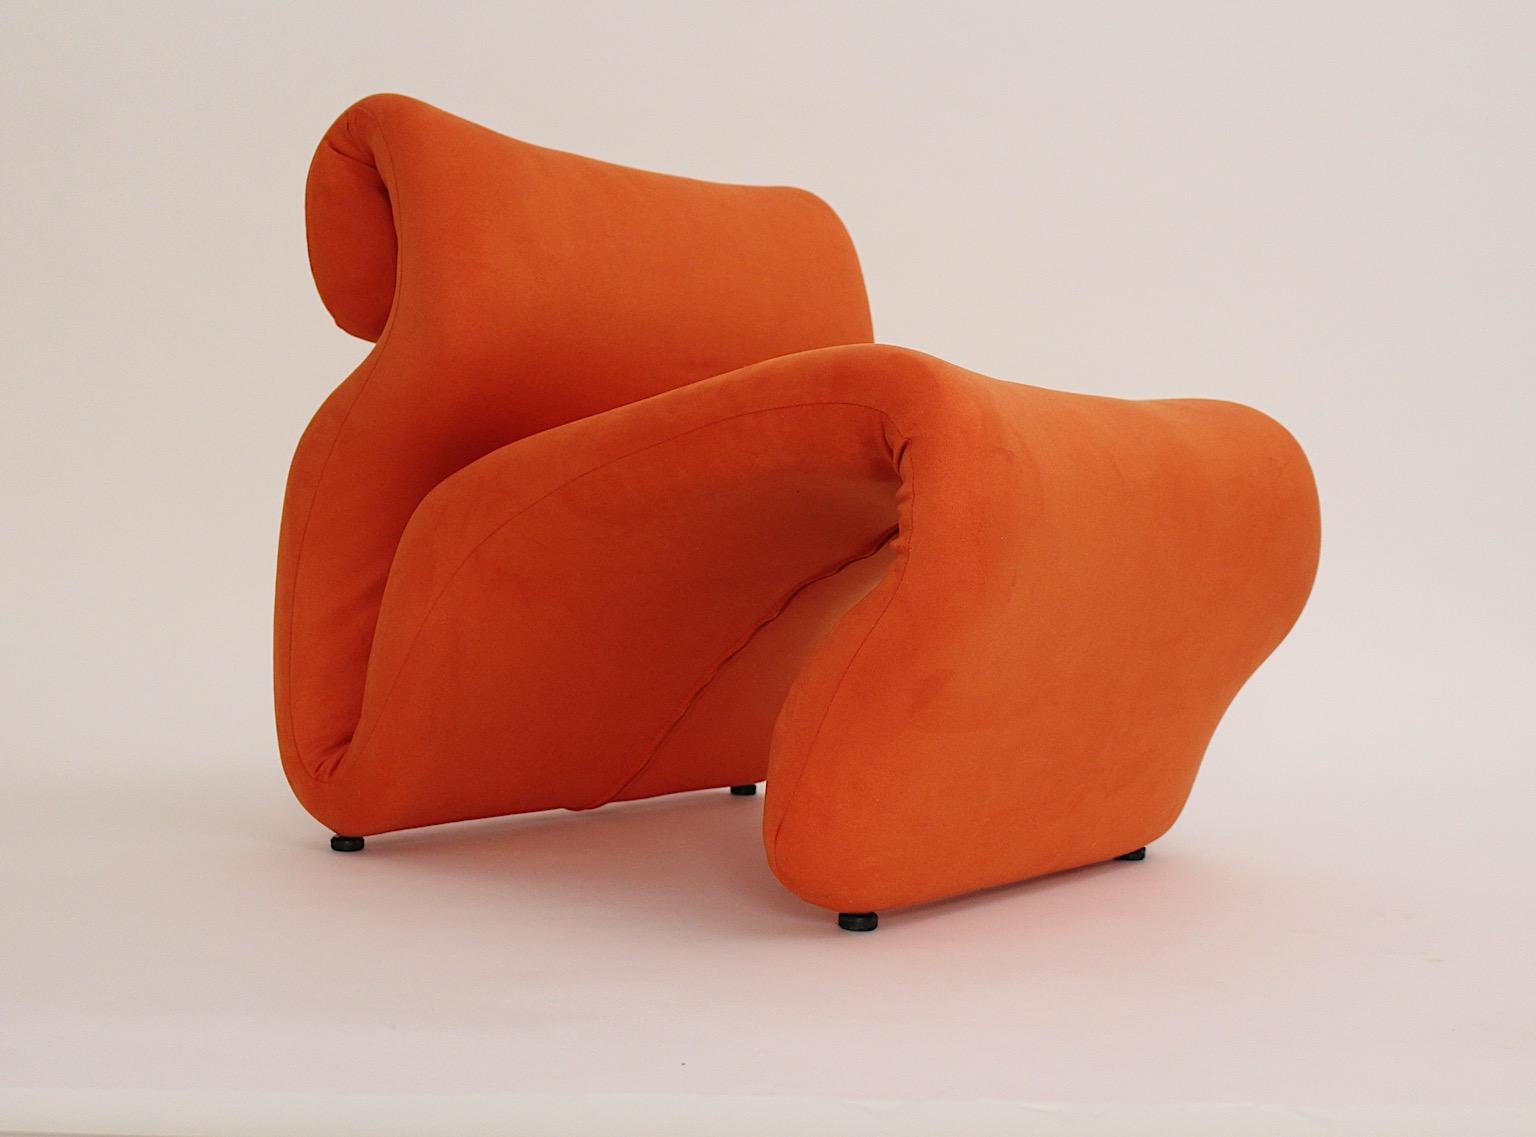 Swedish Space Age Vintage Sculptural Orange Etcetera Chair by Jan Ekselius 1970s Sweden